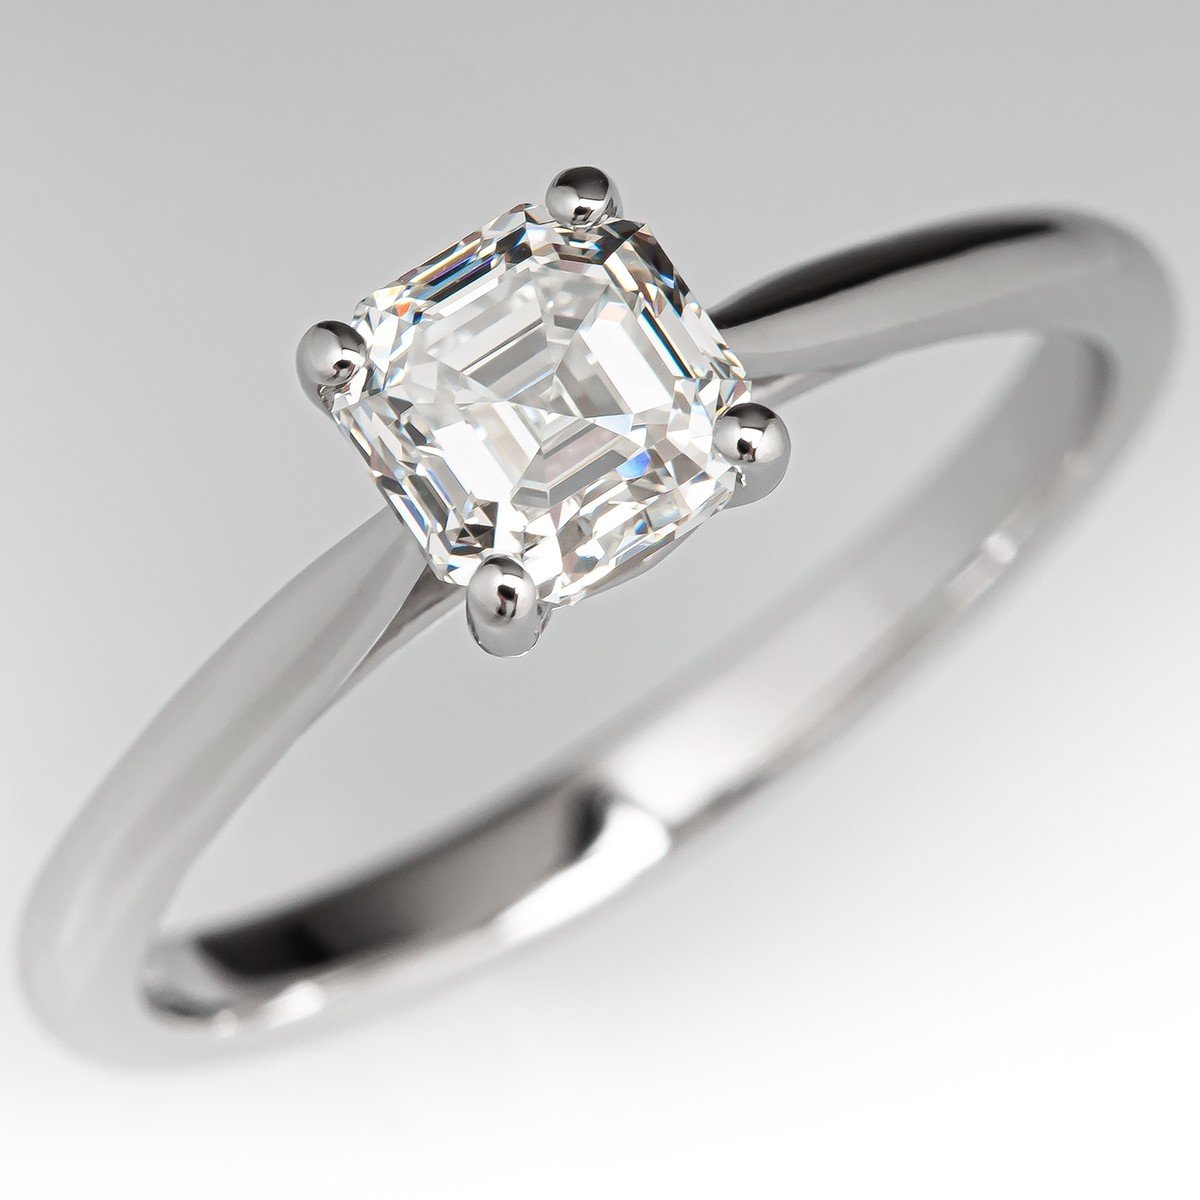 Modern Art Deco Style Platinum and Diamond Engagement Ring Setting